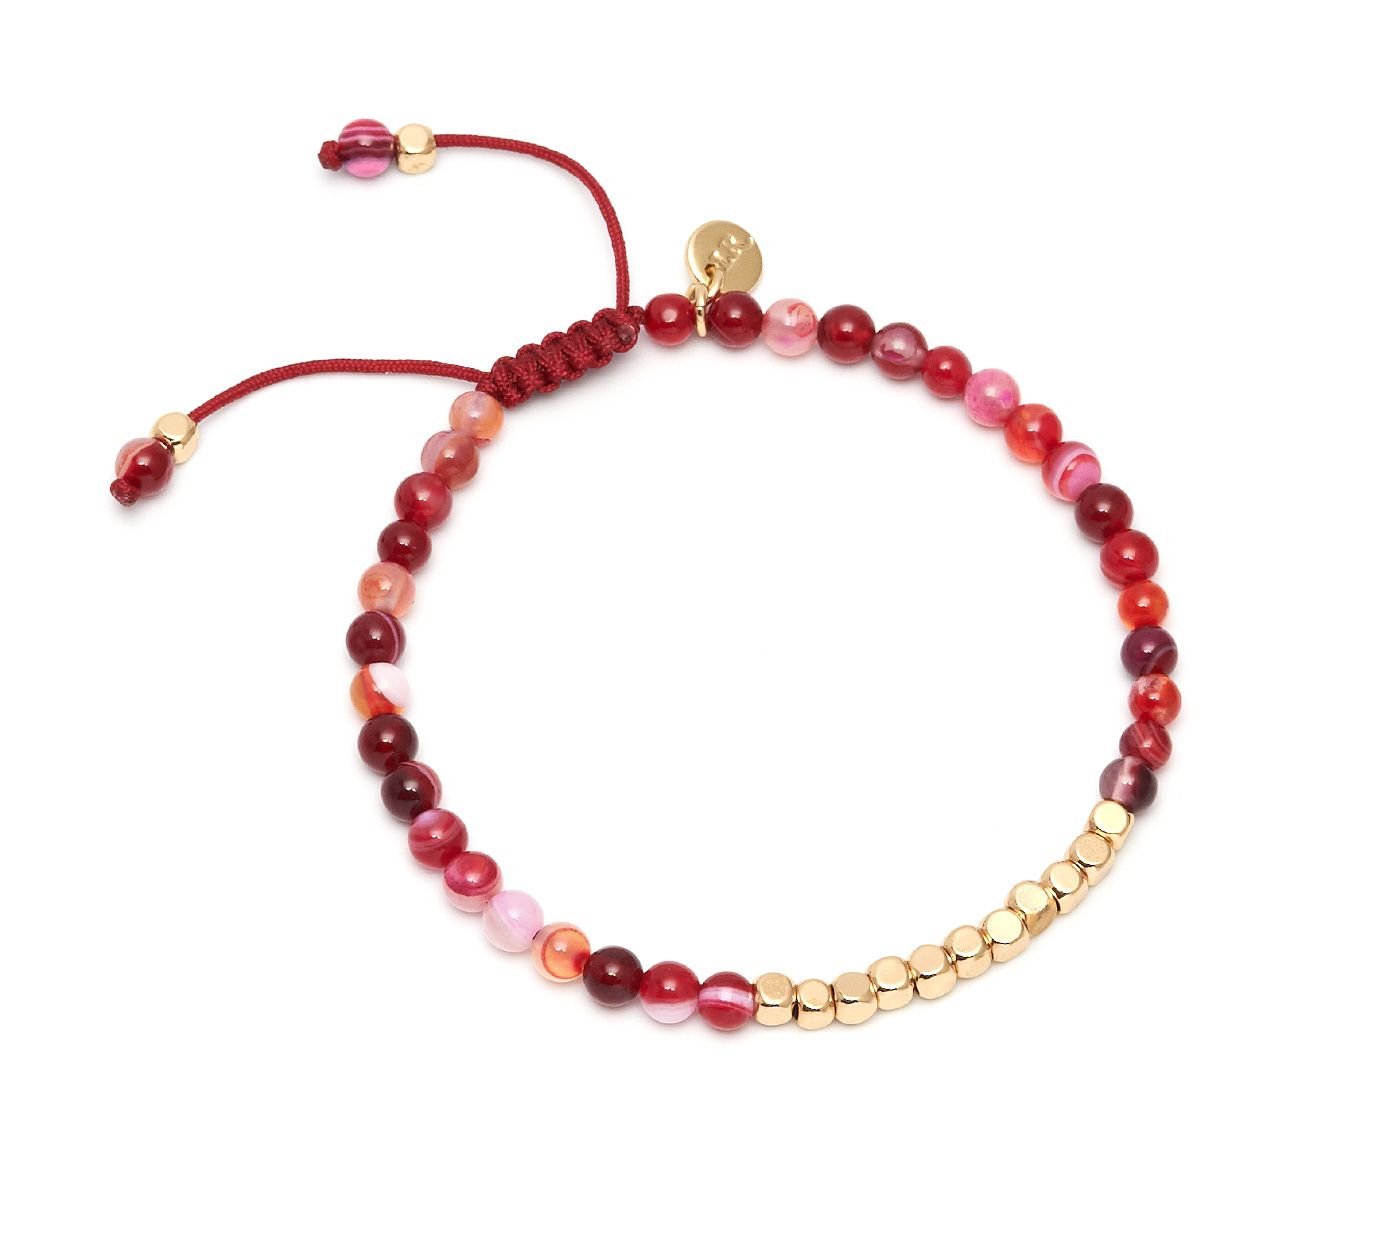 Lola rose Semi-precious Stone Marylebone Bracelet in Red | Lyst